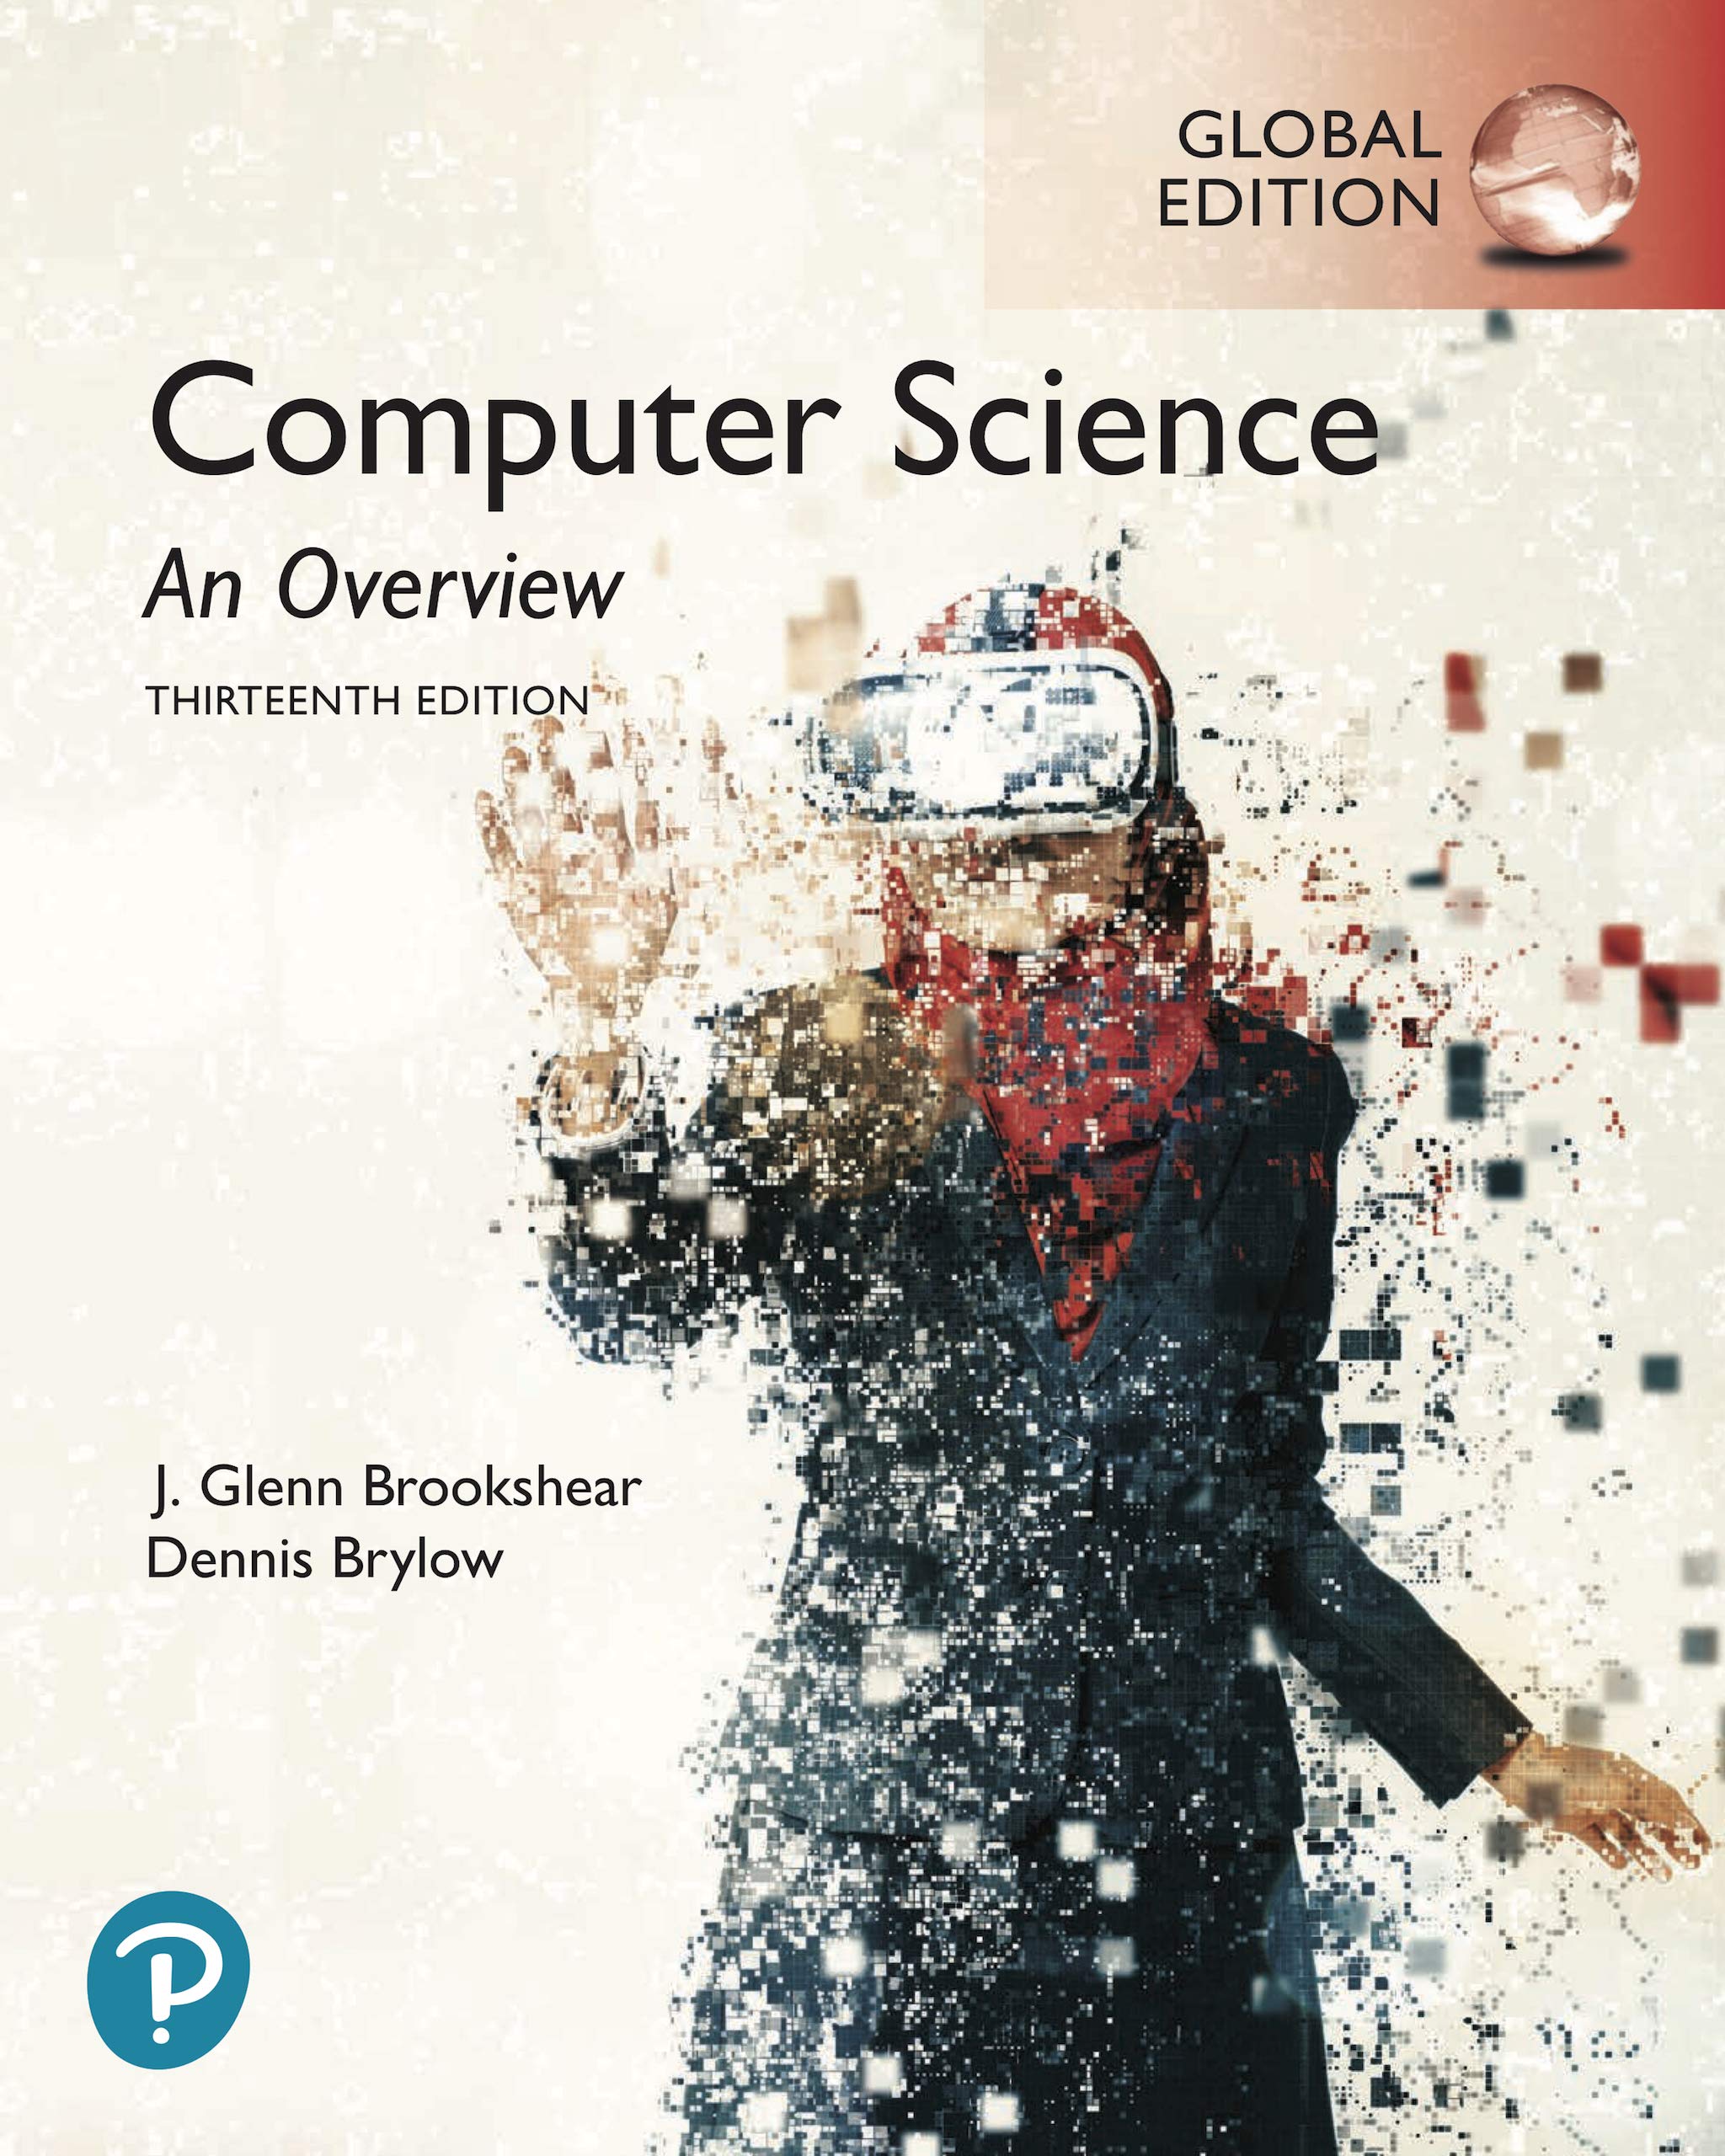 computer-science-an-overview-global-edition-author-glenn-brookshear-dennis-brylow-publisher-pearson2022-02-19-170625.jpg